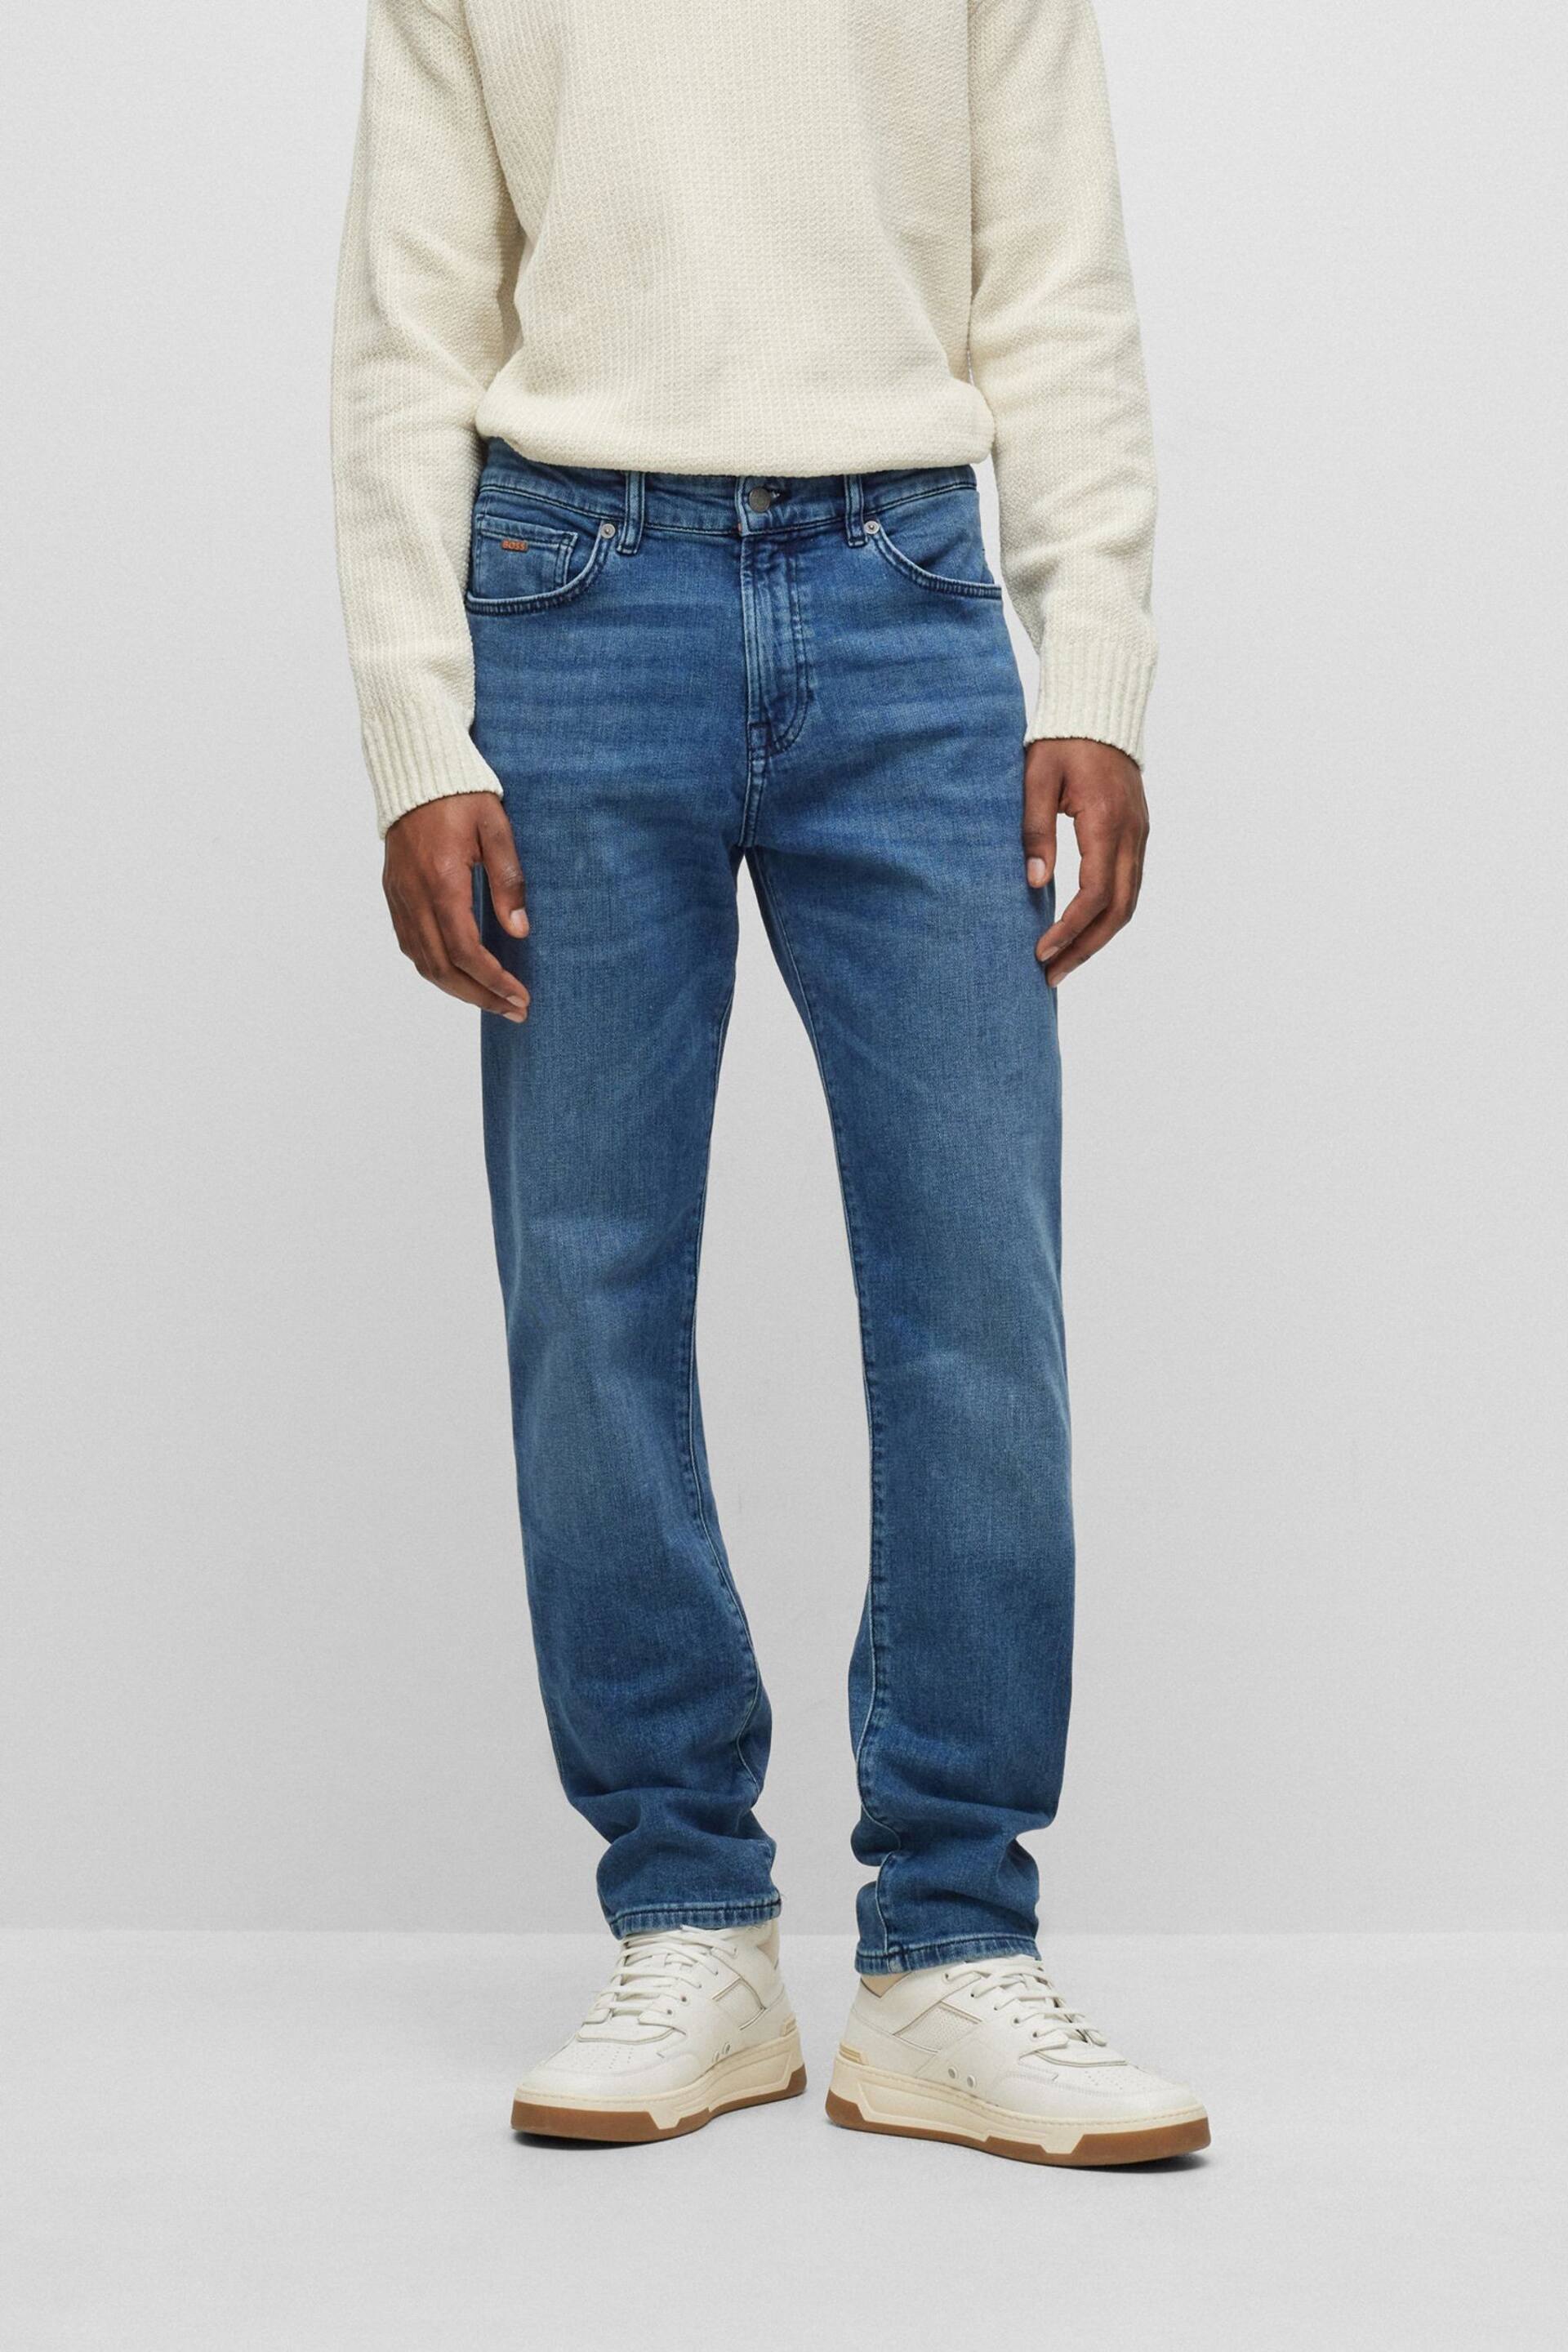 BOSS Light Blue Maine Straight Fit Stretch Denim Jeans - Image 1 of 4